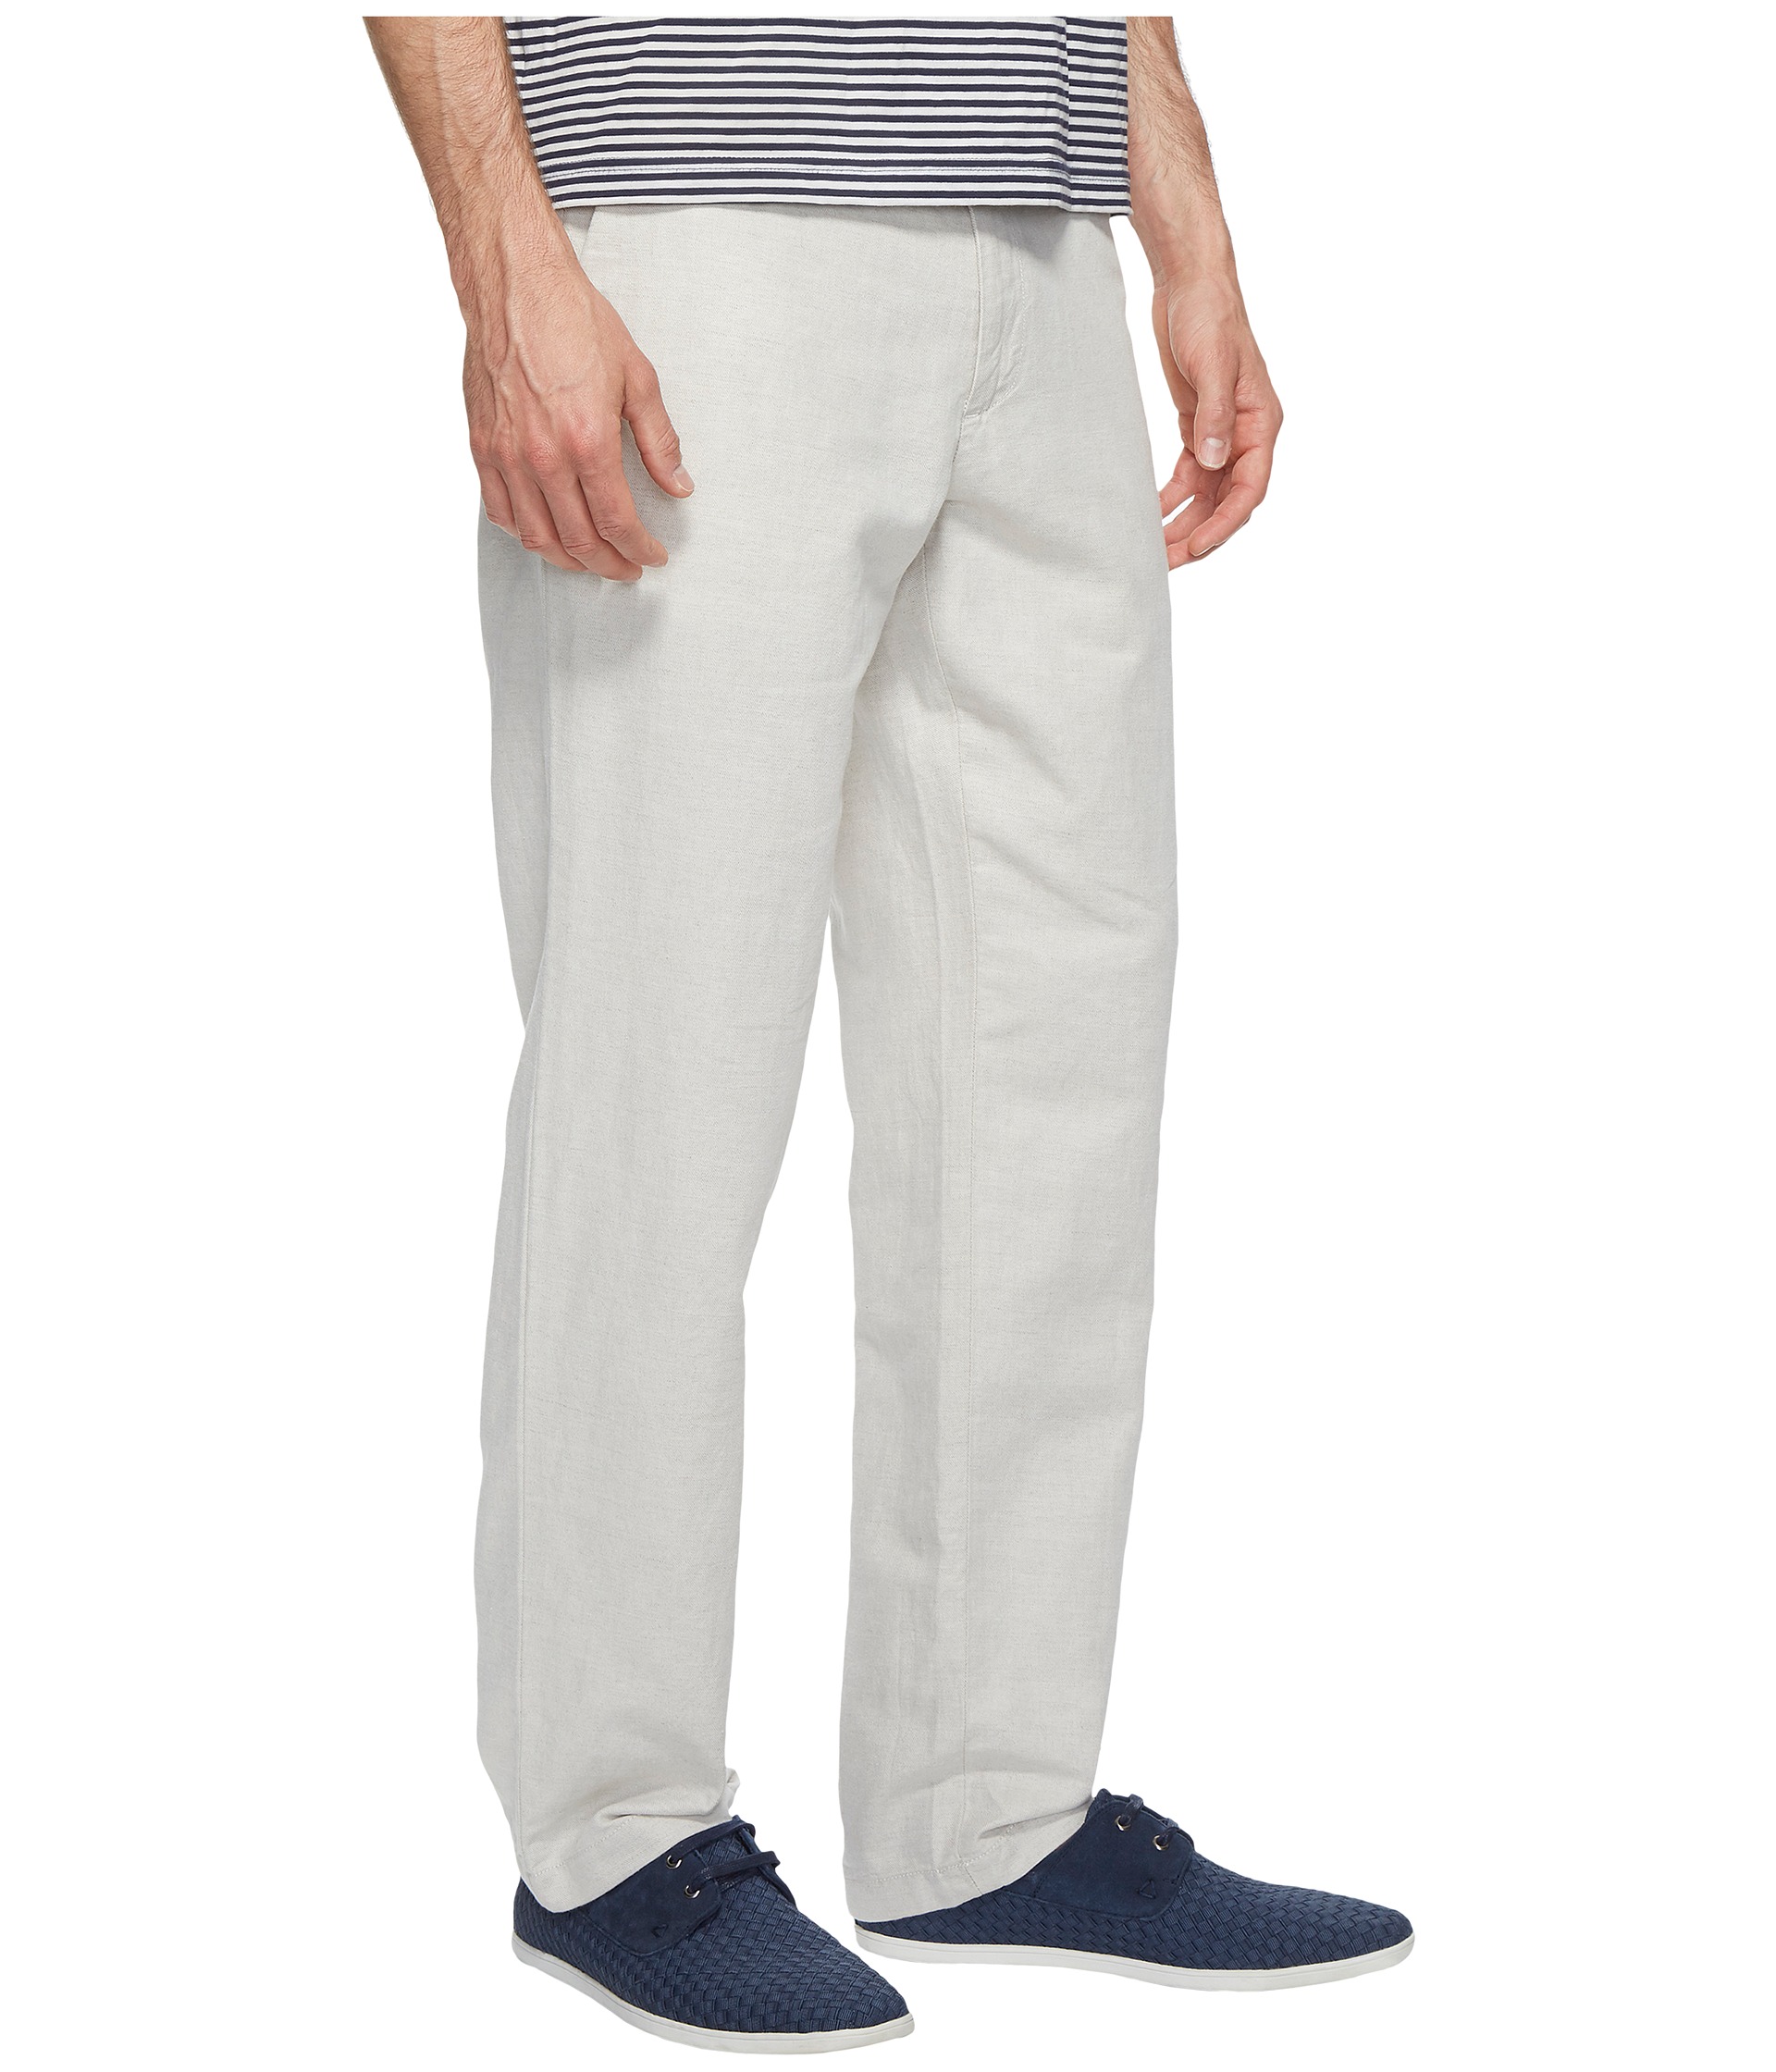 Nautica Linen Cotton Pants at Zappos.com